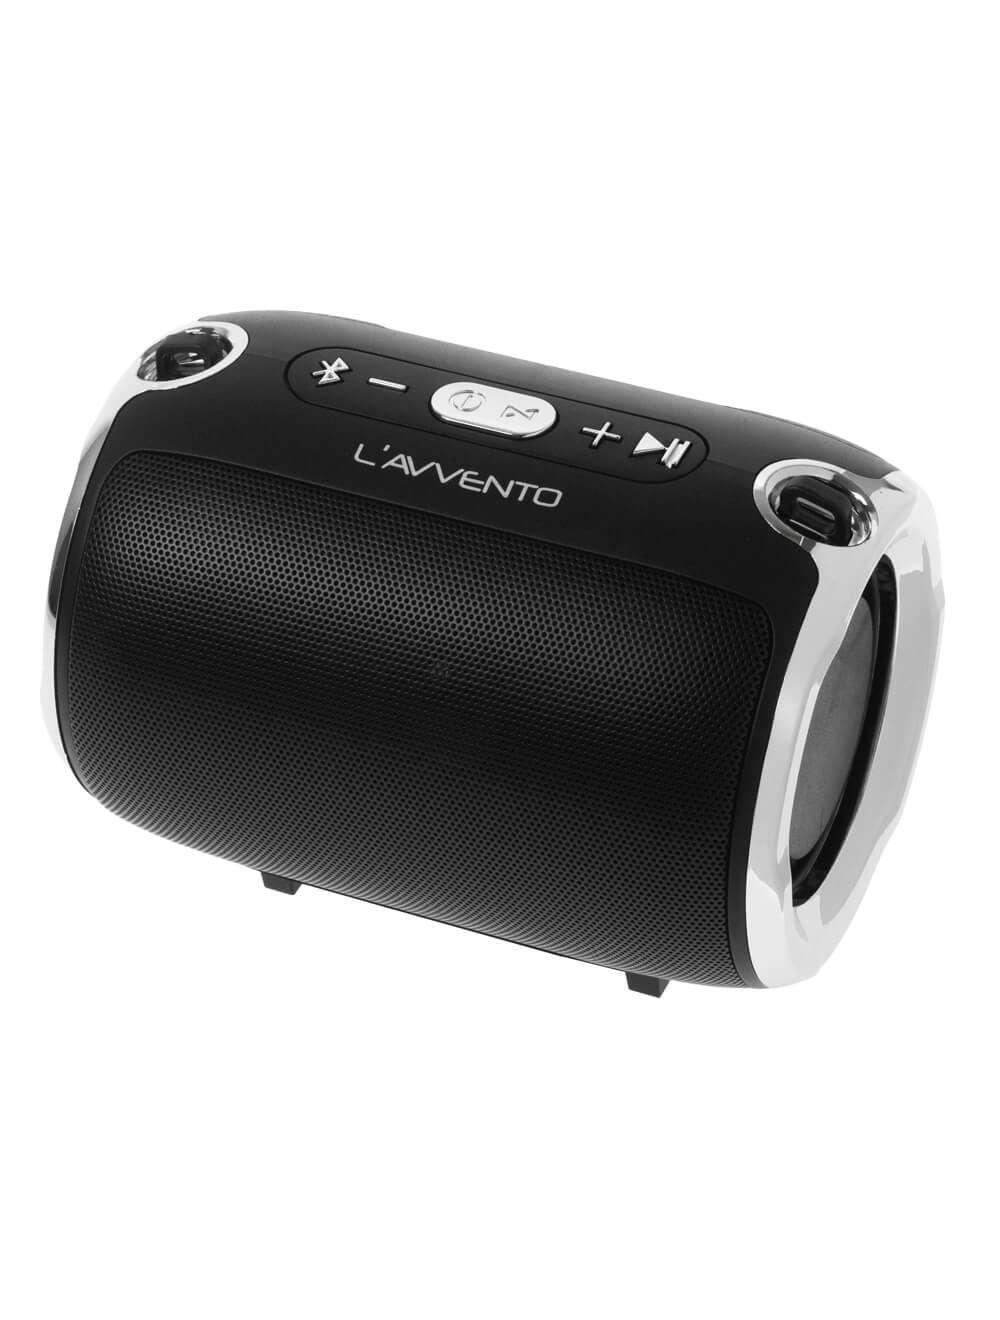 L'avvento (SP337) Portable Bluetooth Speaker with Shoulder Strap - Black - ALARABIYA COMPUTER